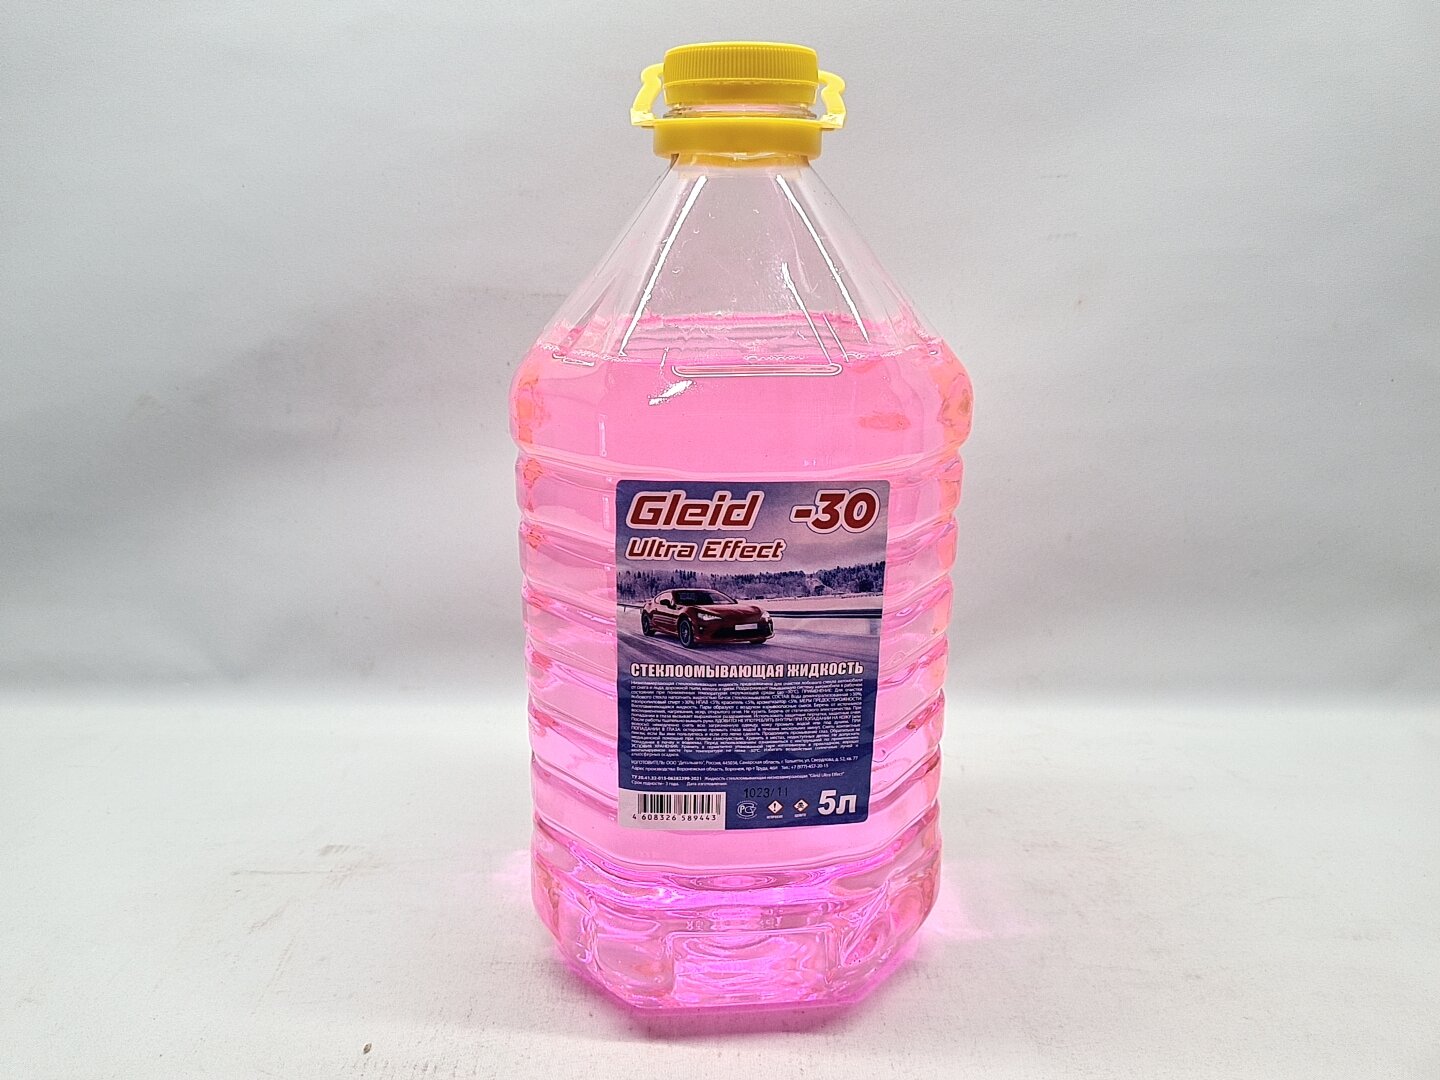 Незамерзайка Gleid "Ultra Effect" без запаха 5л -30 градусов розовый